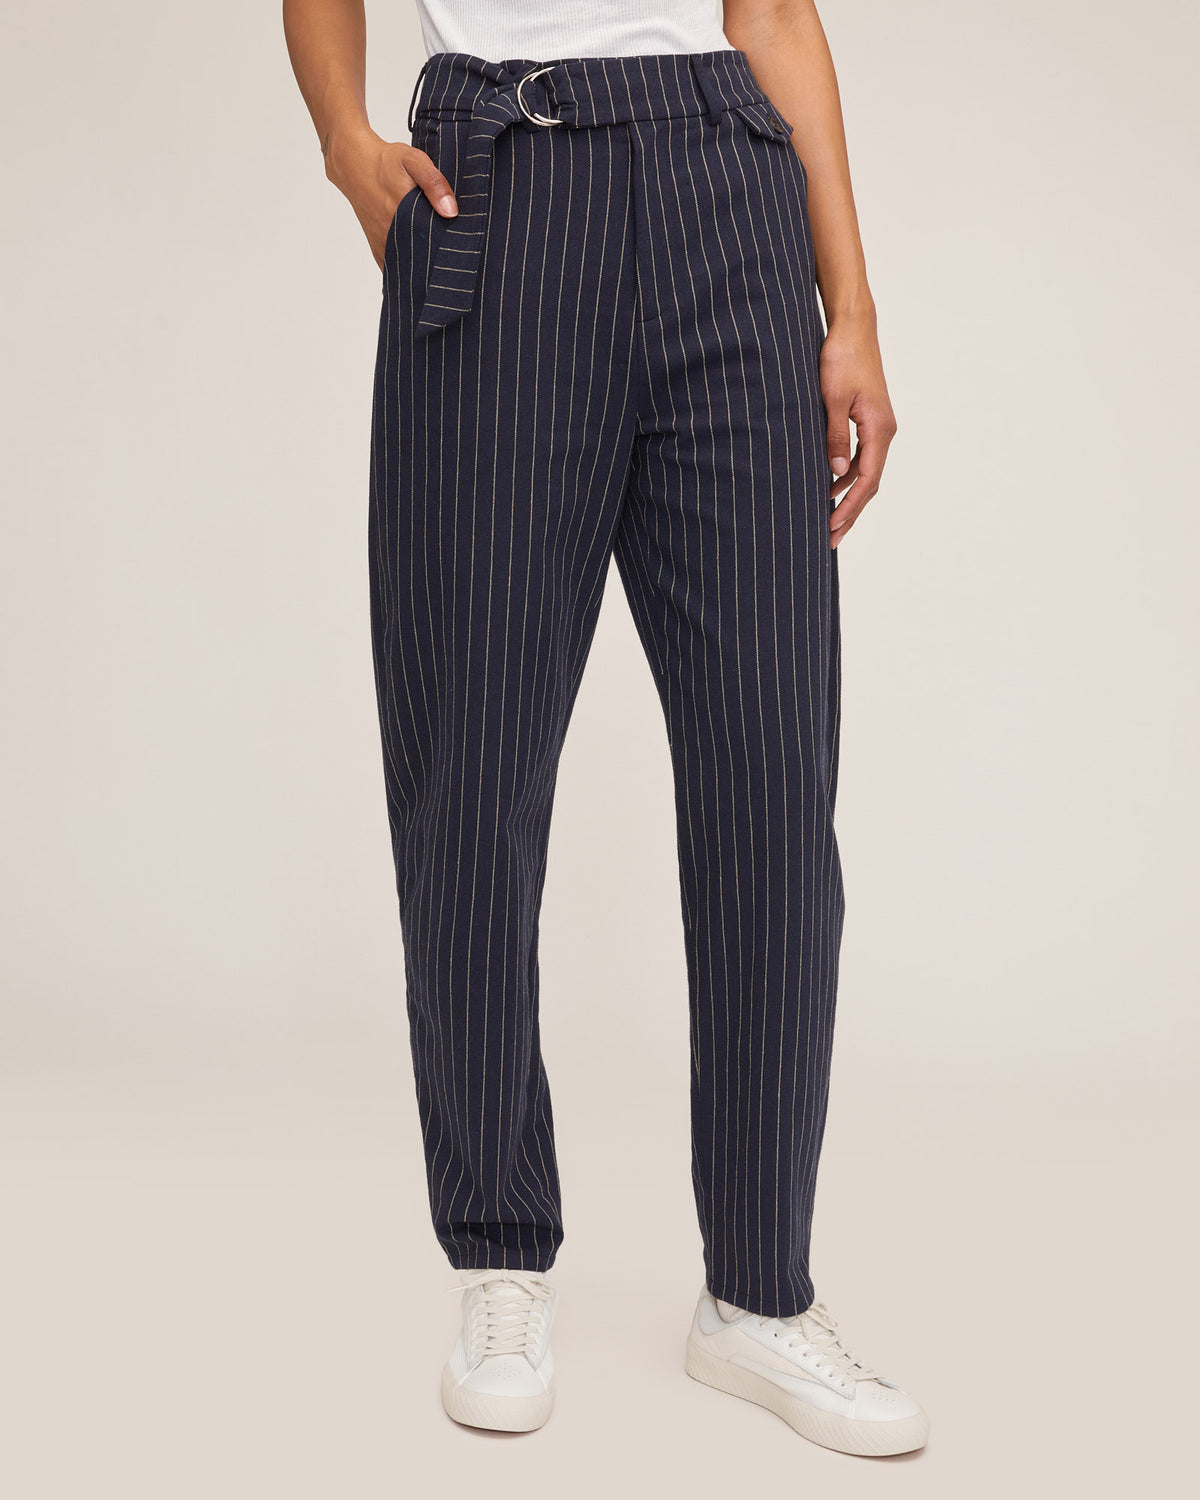 Topshop Straight Leg Navy Pinstripe Striped Trousers Sz 10 | eBay